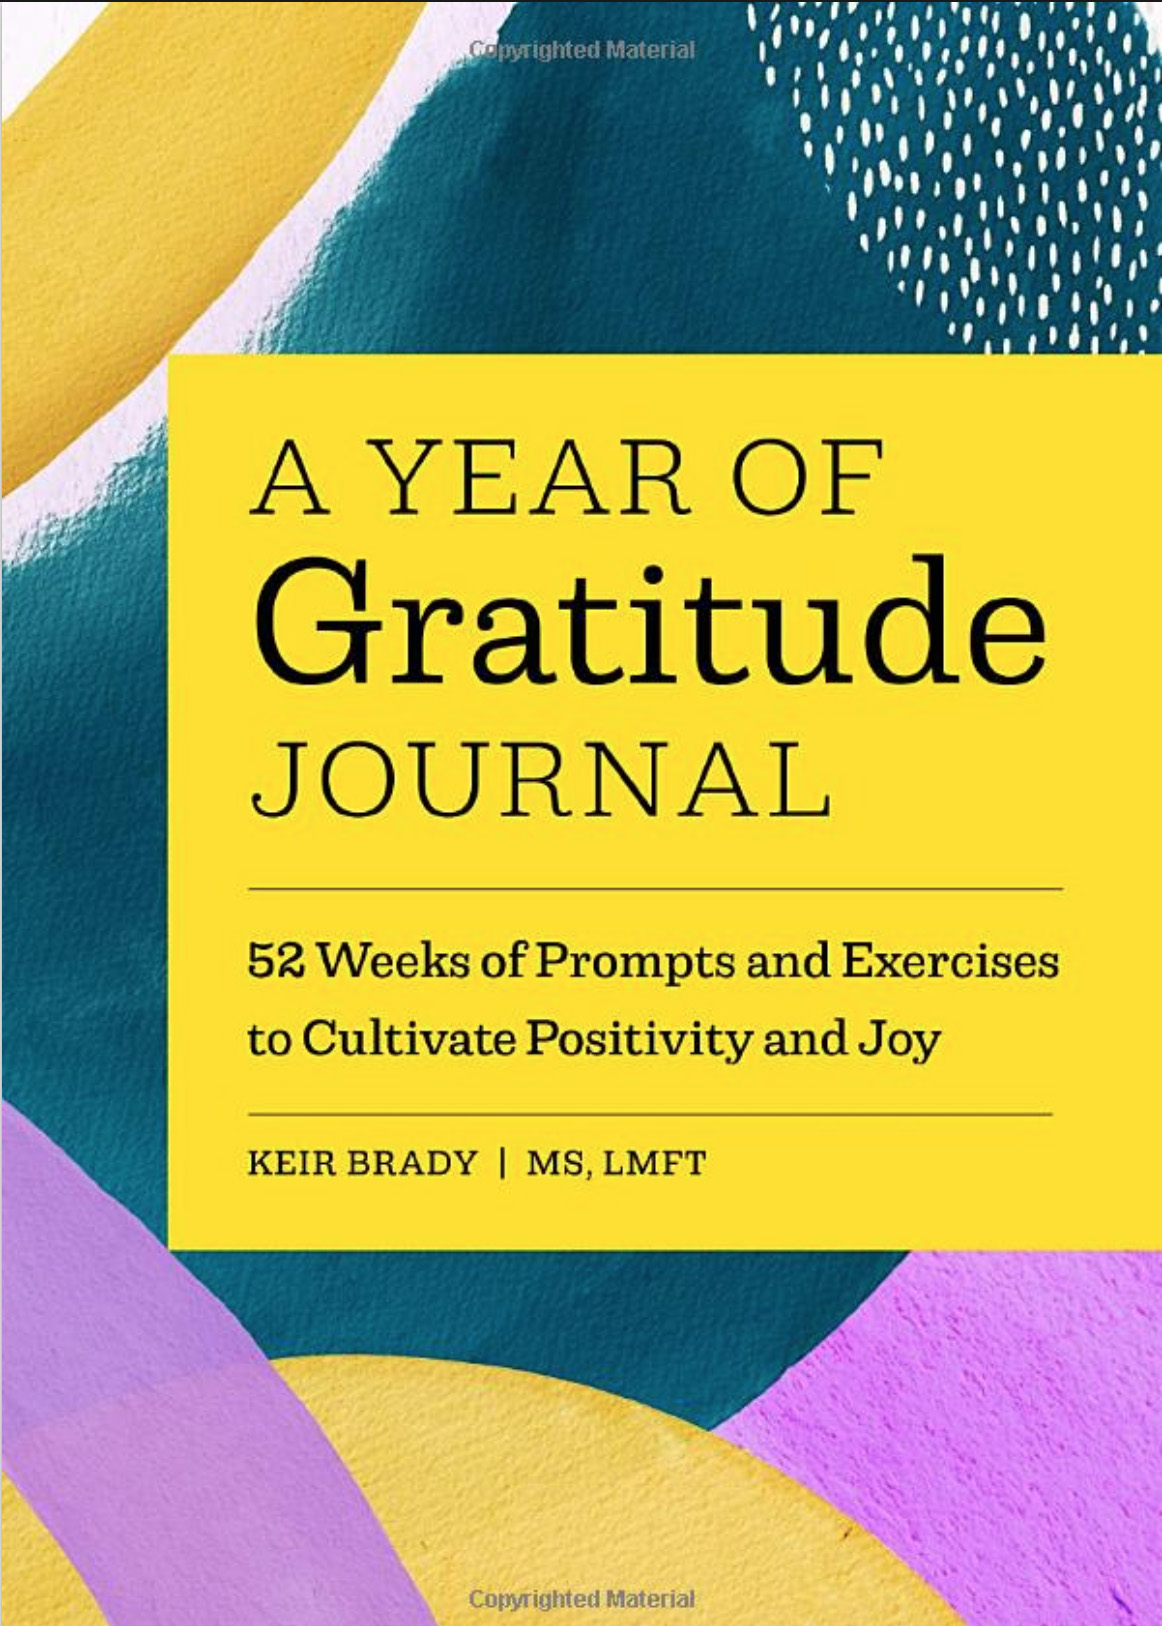 A Year of Gratitude Journal